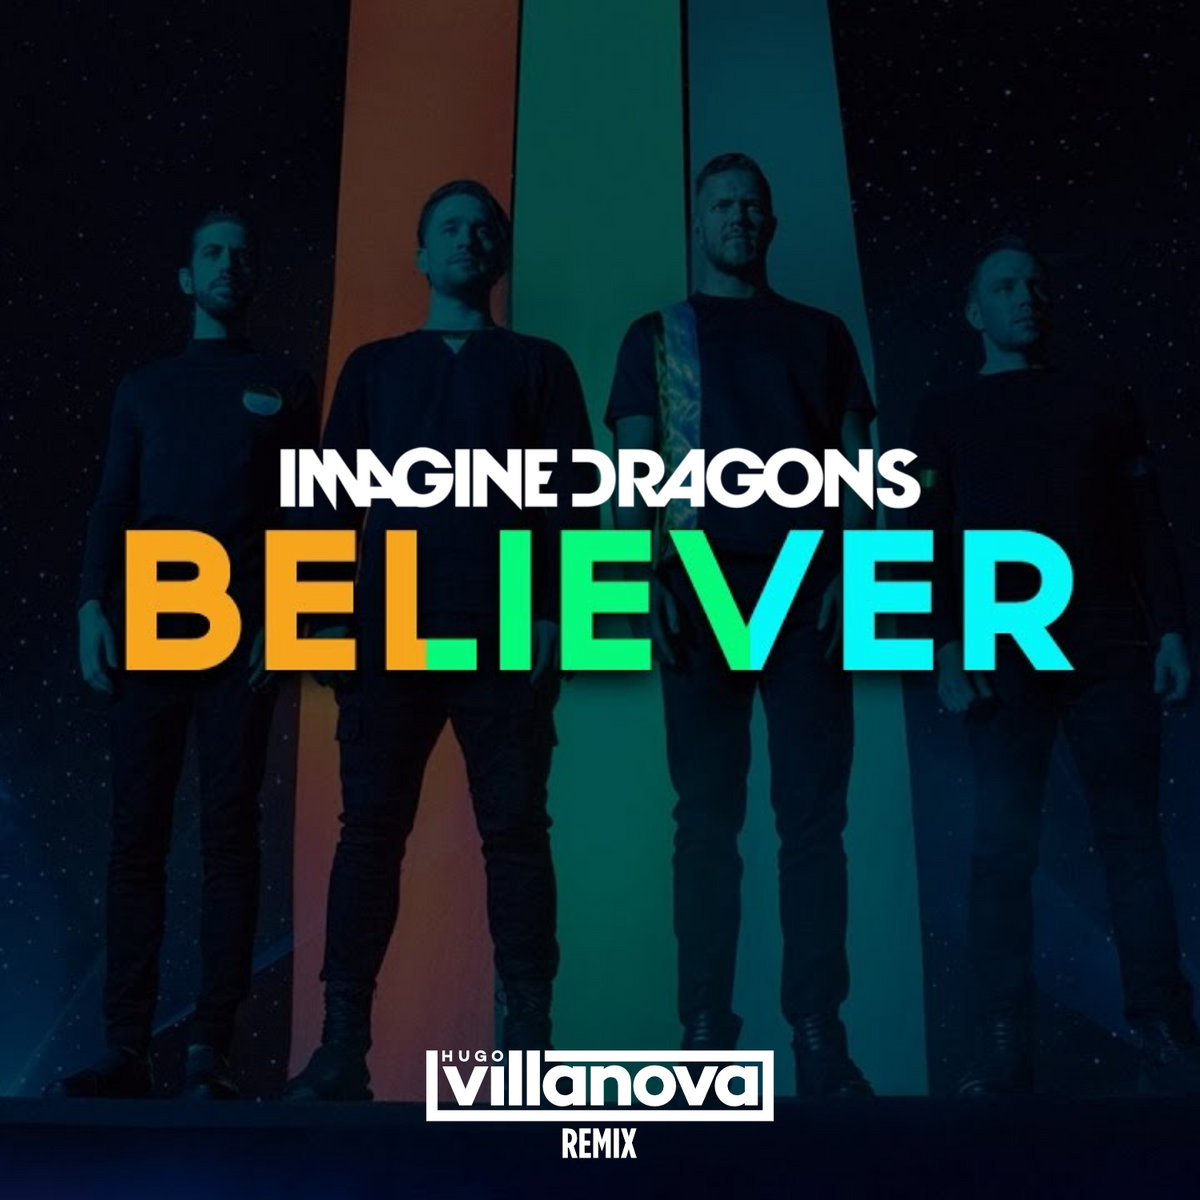 Imagine Dragons - Believer (Hugo Villanova Remix)